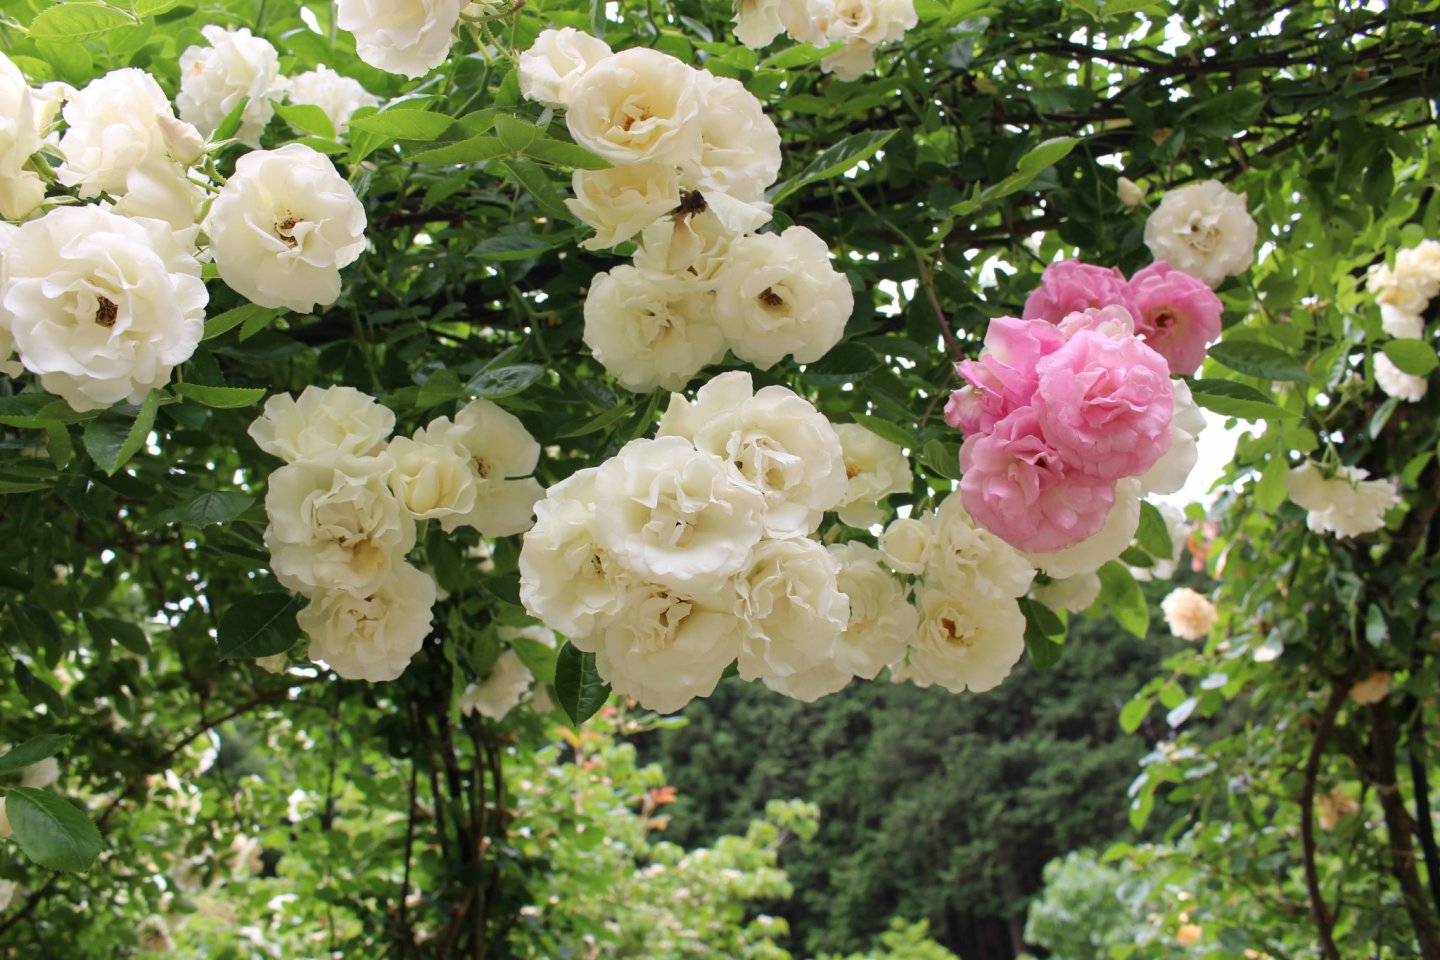 Roses at Takinoiri Rose Garden, May 2021